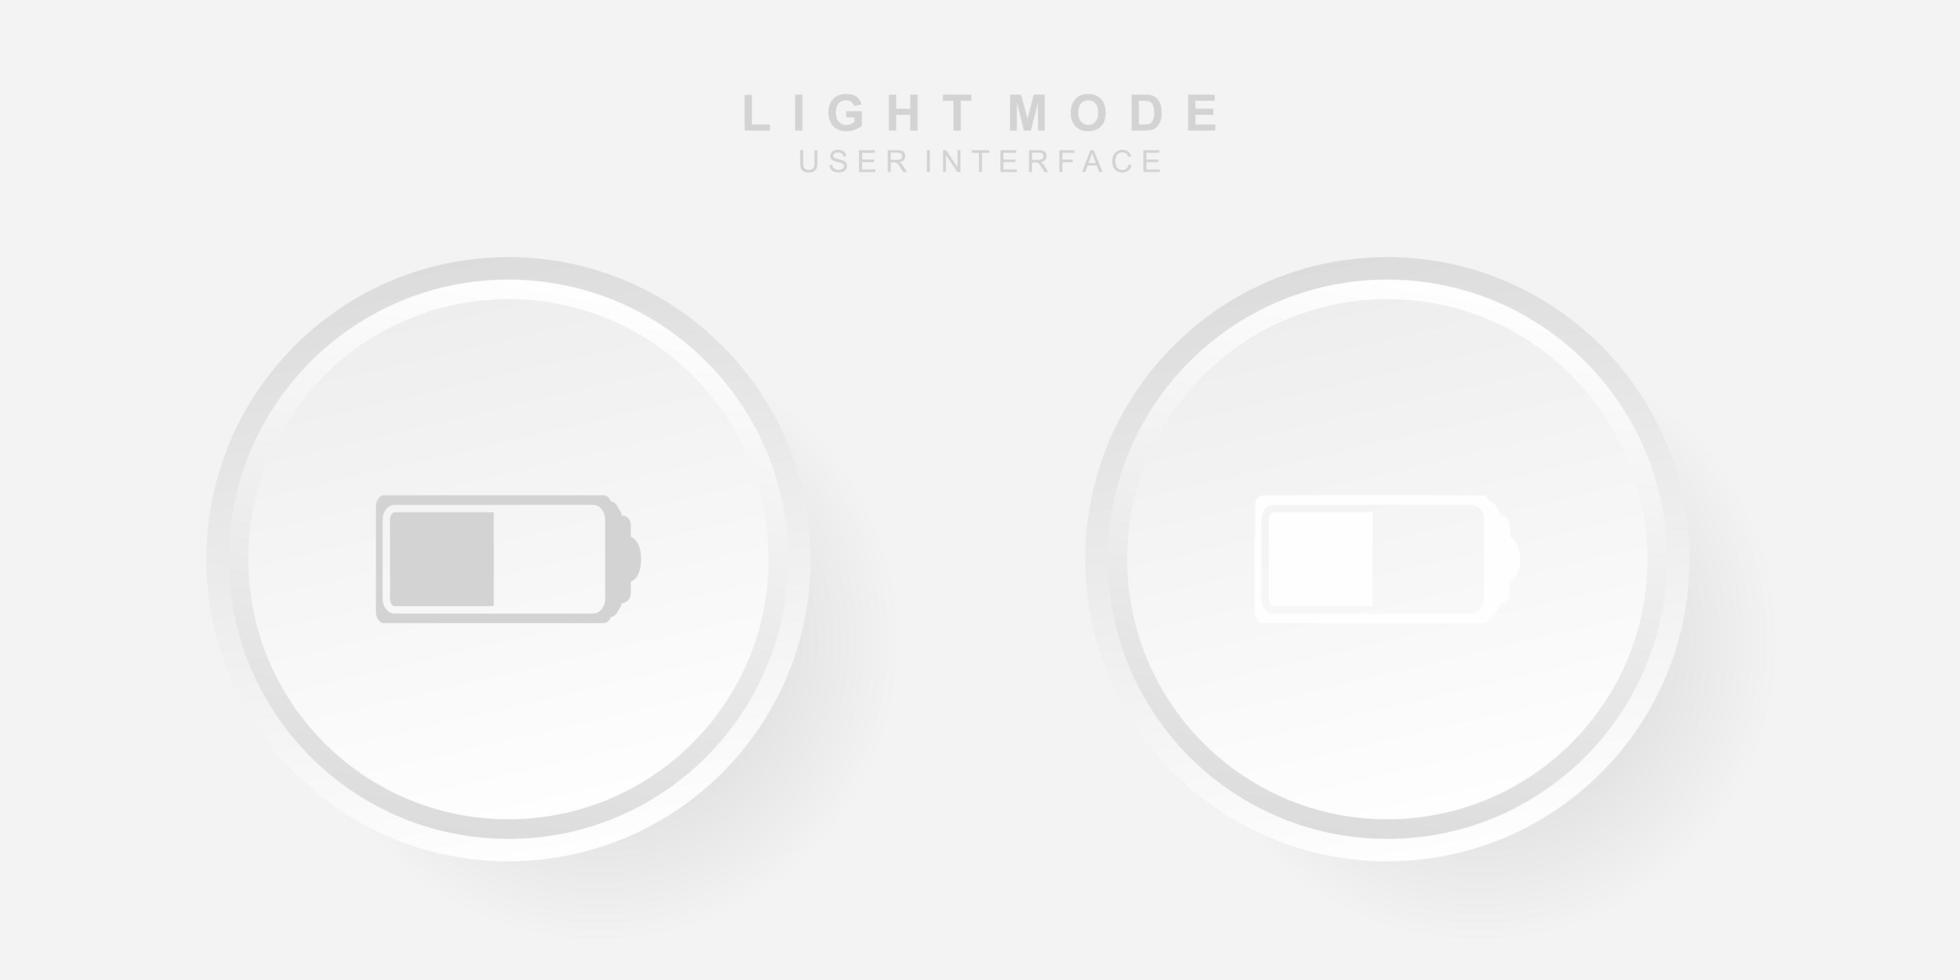 Simple Creative Battery User Interface in Light Neumorphism Design vector